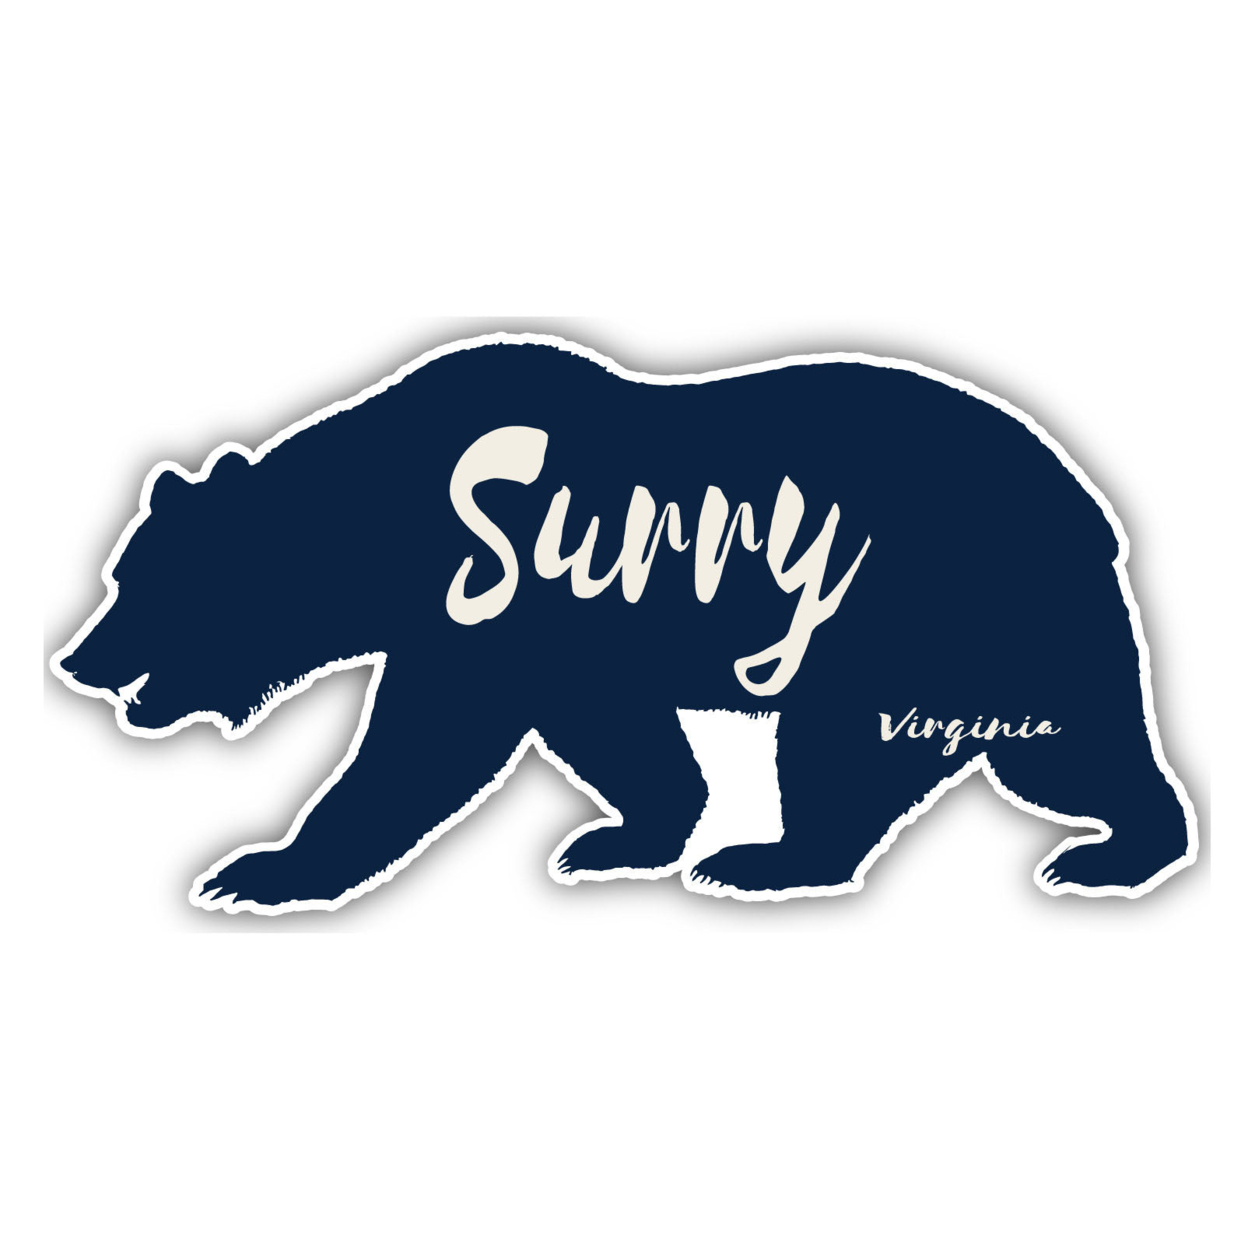 Surry Virginia Souvenir Decorative Stickers (Choose Theme And Size) - Single Unit, 4-Inch, Bear